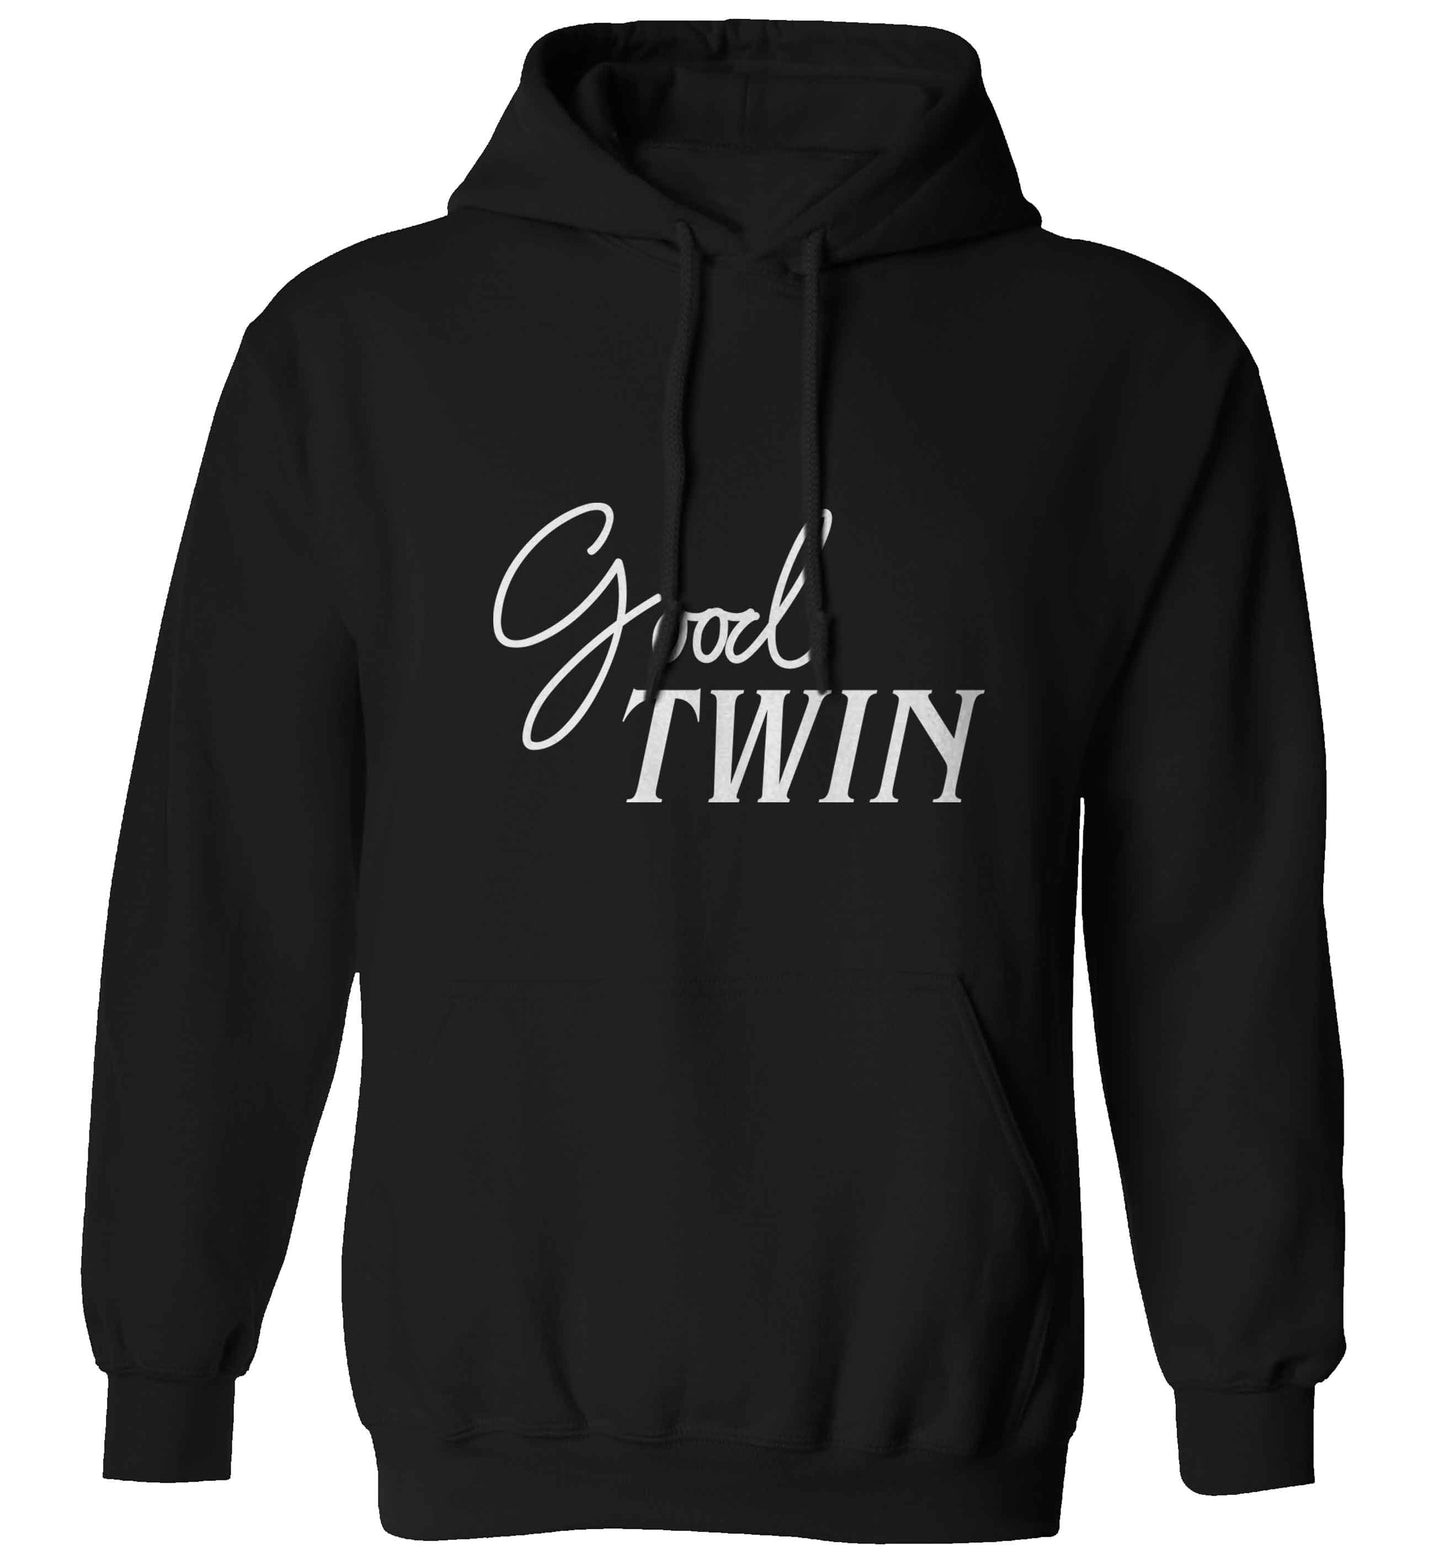 Good twin adults unisex black hoodie 2XL